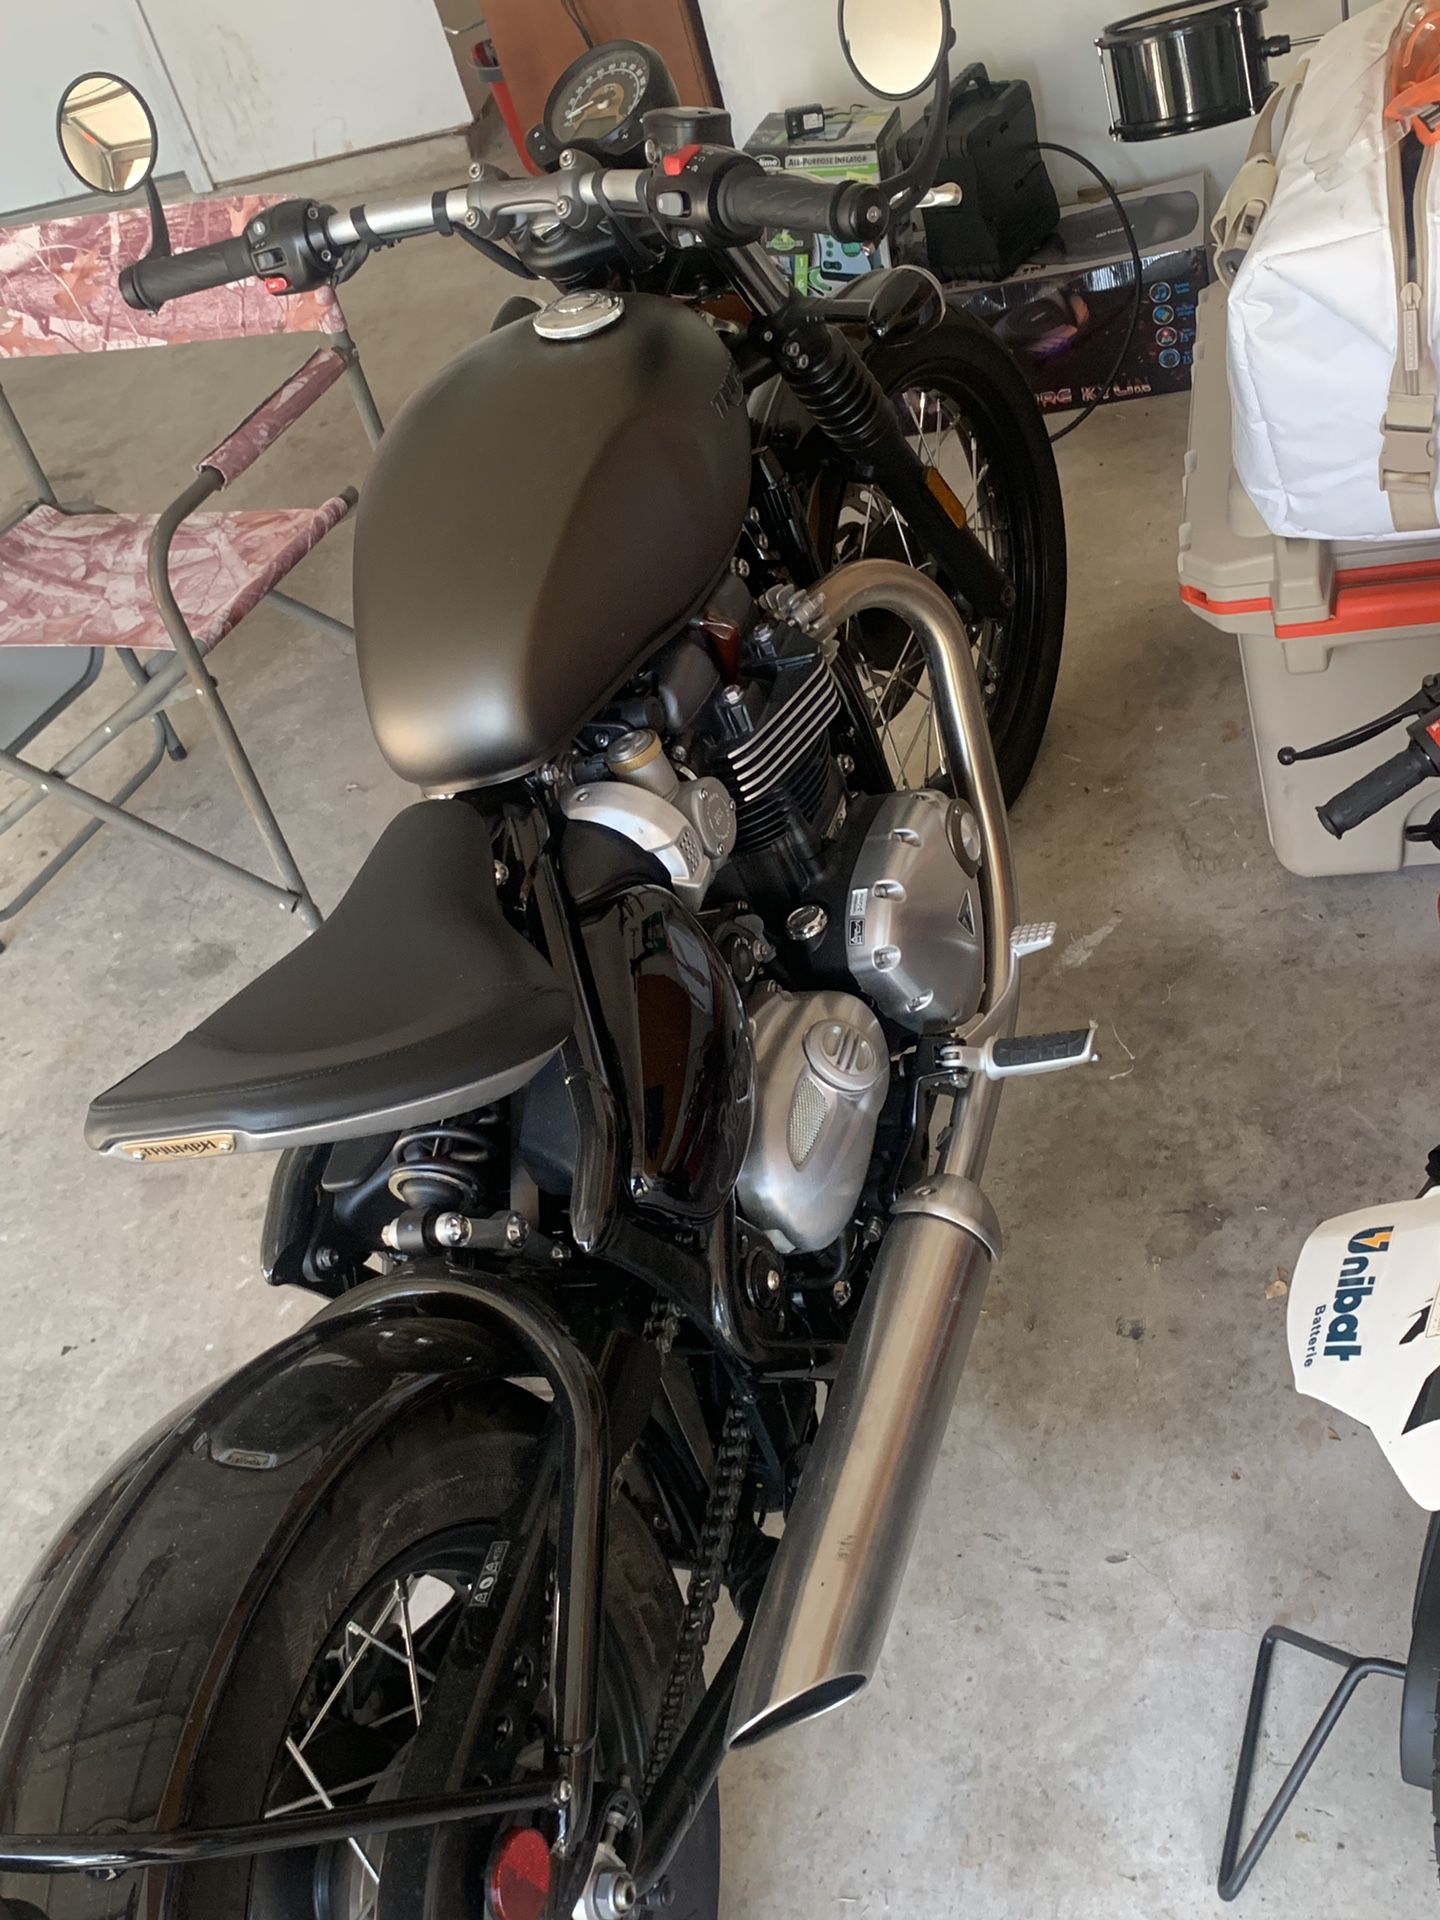 2018 Triumph Bobber motorcycle (600miles )